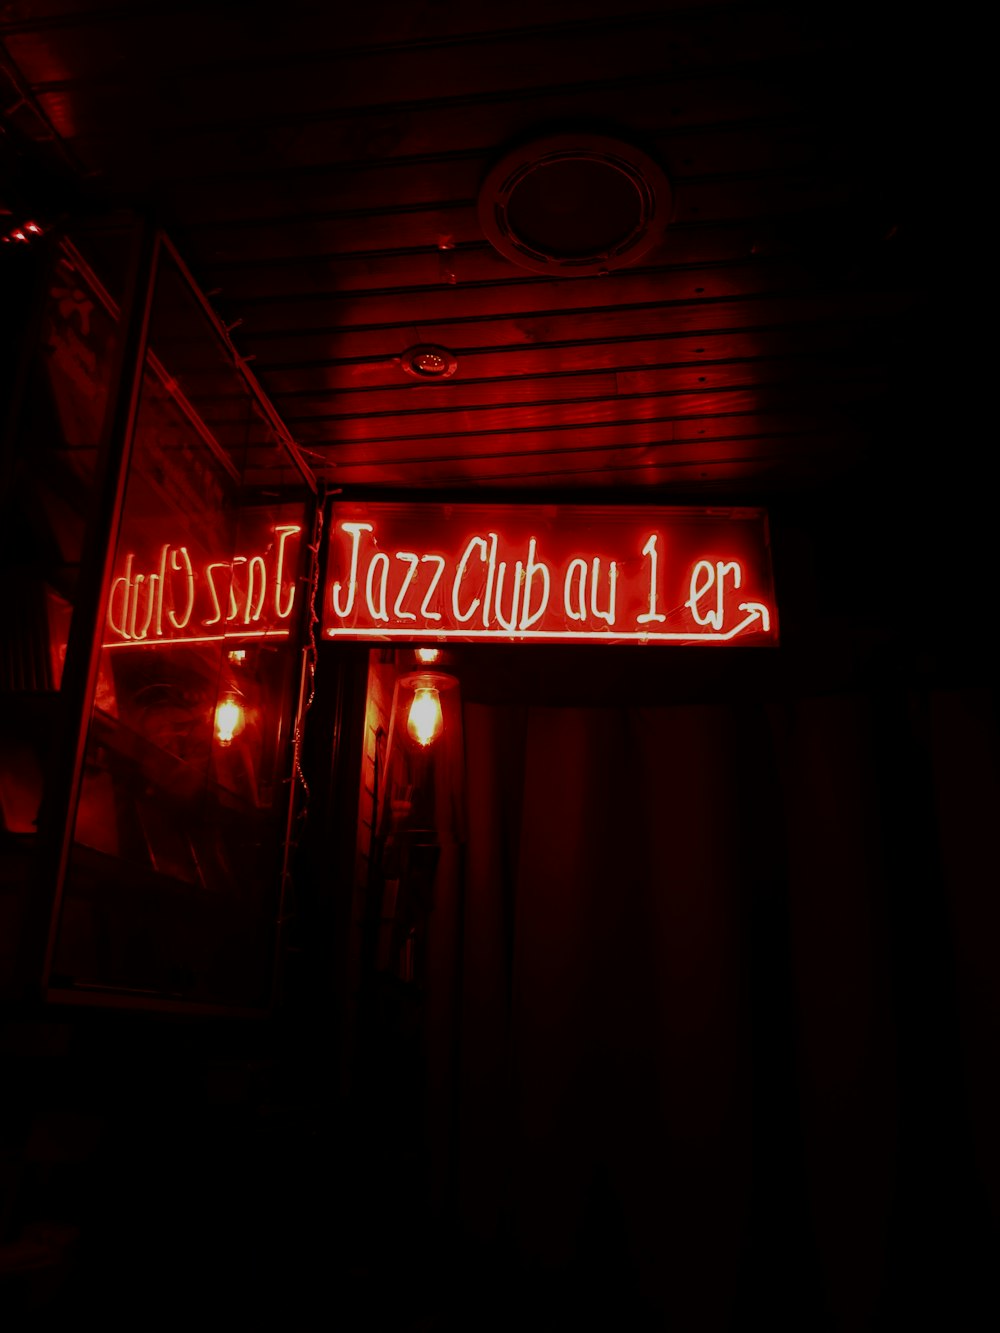 Insegne al neon del Jazz Club accese